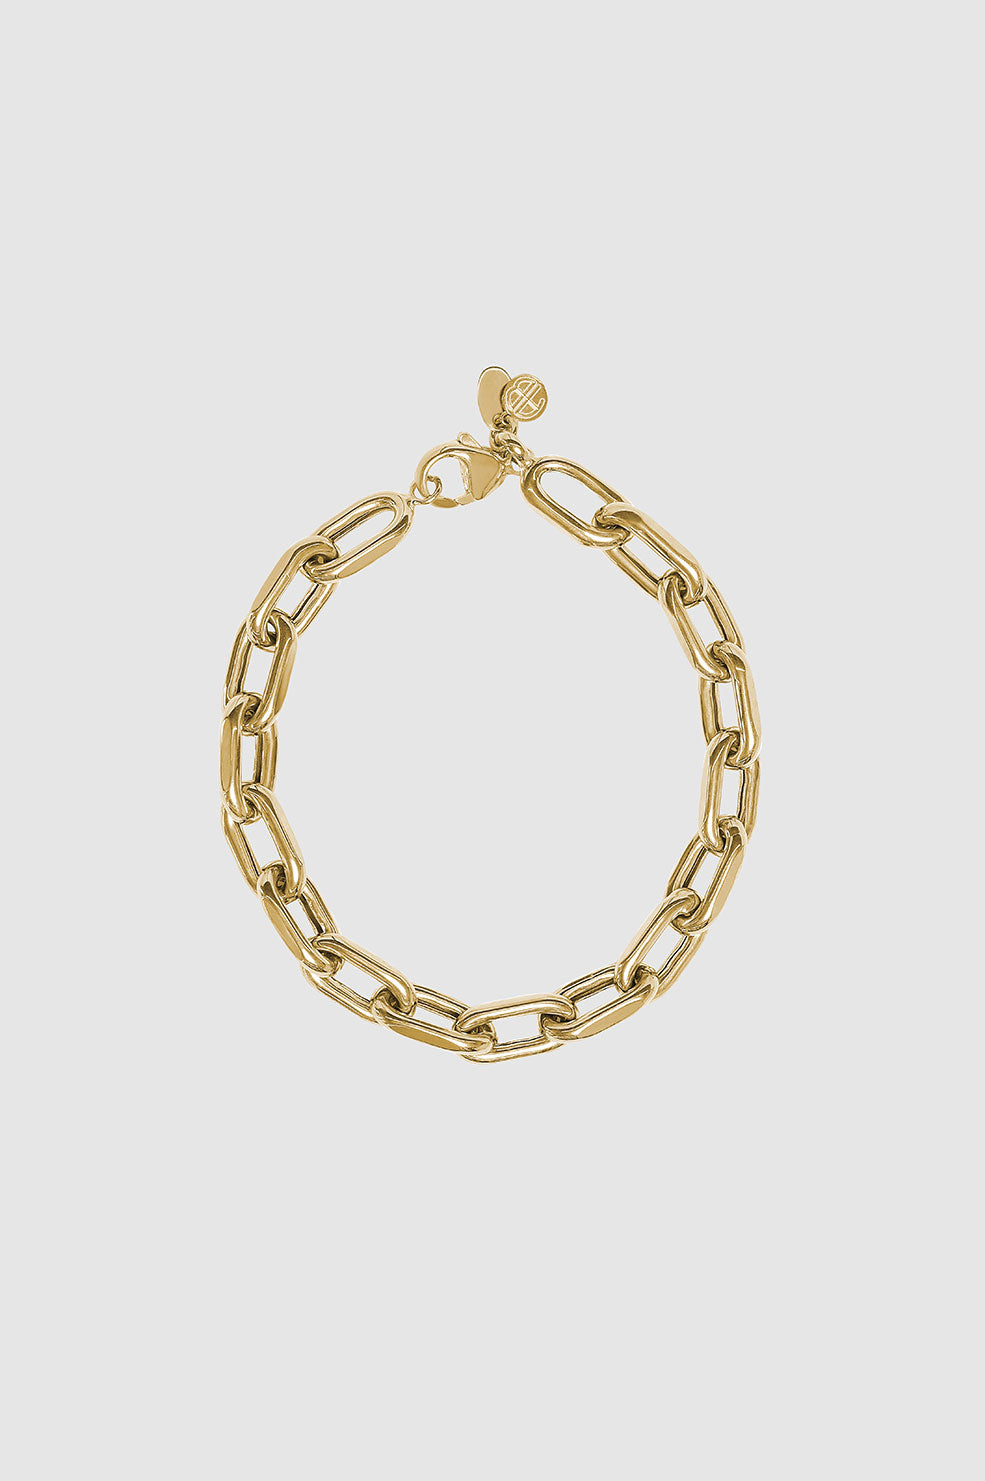 14K Gold Extra Large Open Link Chain Bracelet